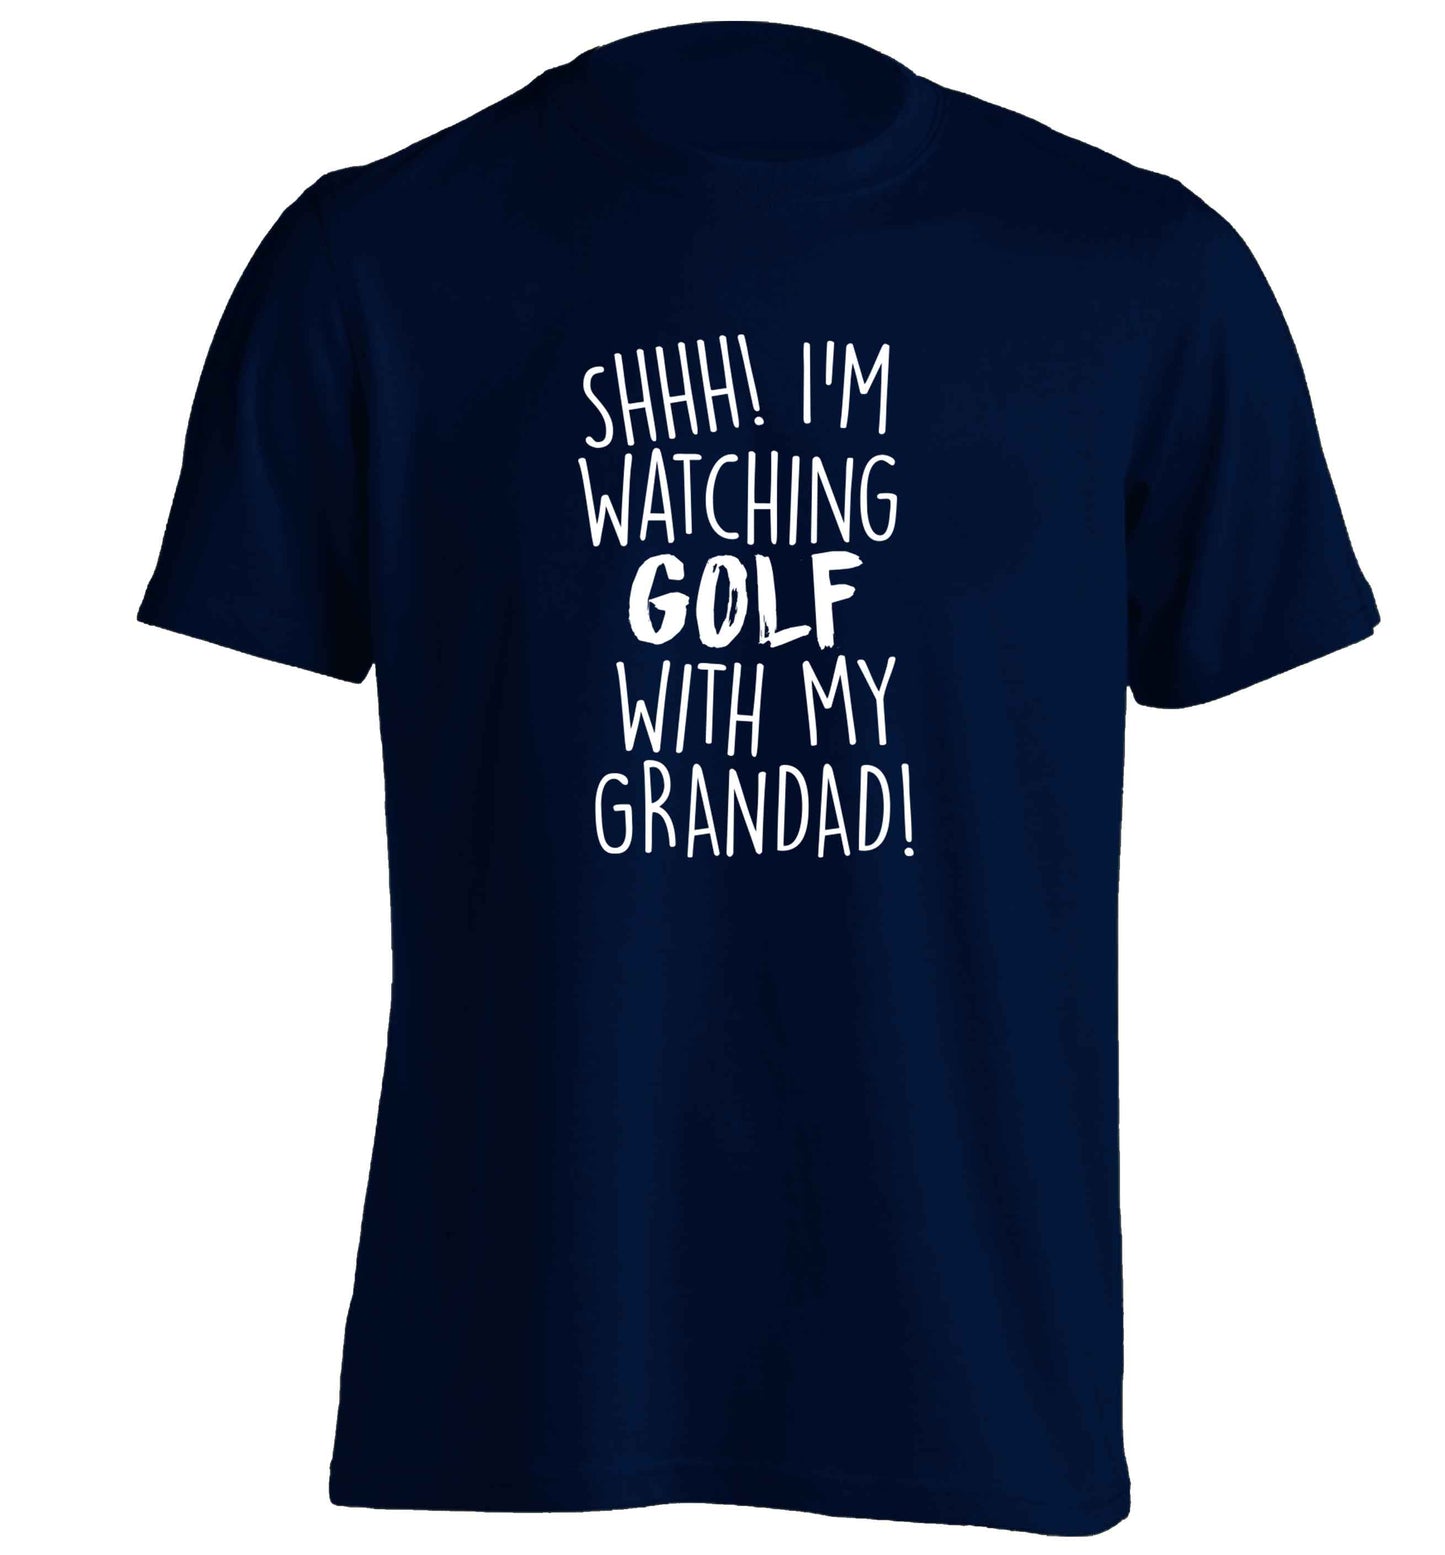 Shh I'm watching golf with my grandad adults unisex navy Tshirt 2XL